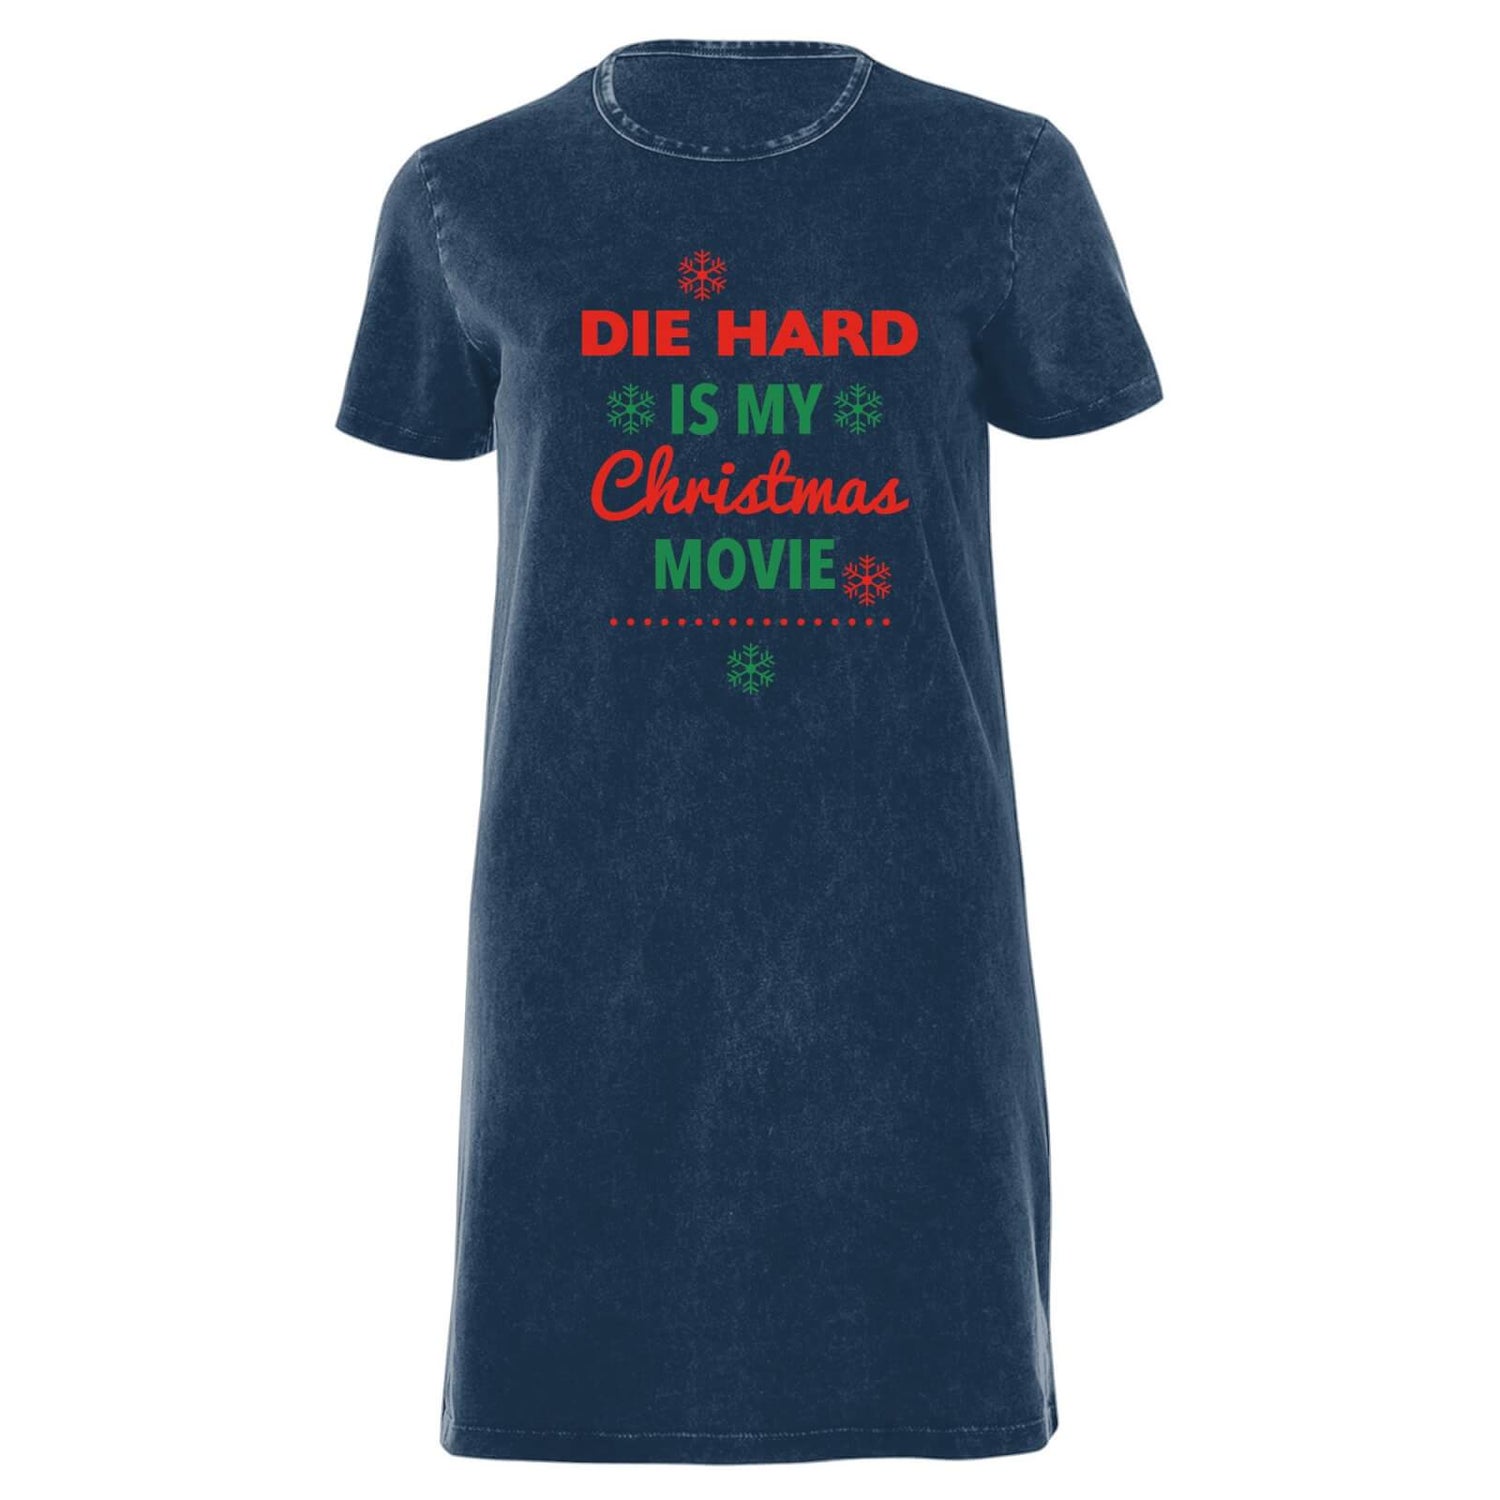 Die Hard Christmas Movie Women's T-Shirt Dress - Navy Acid Wash